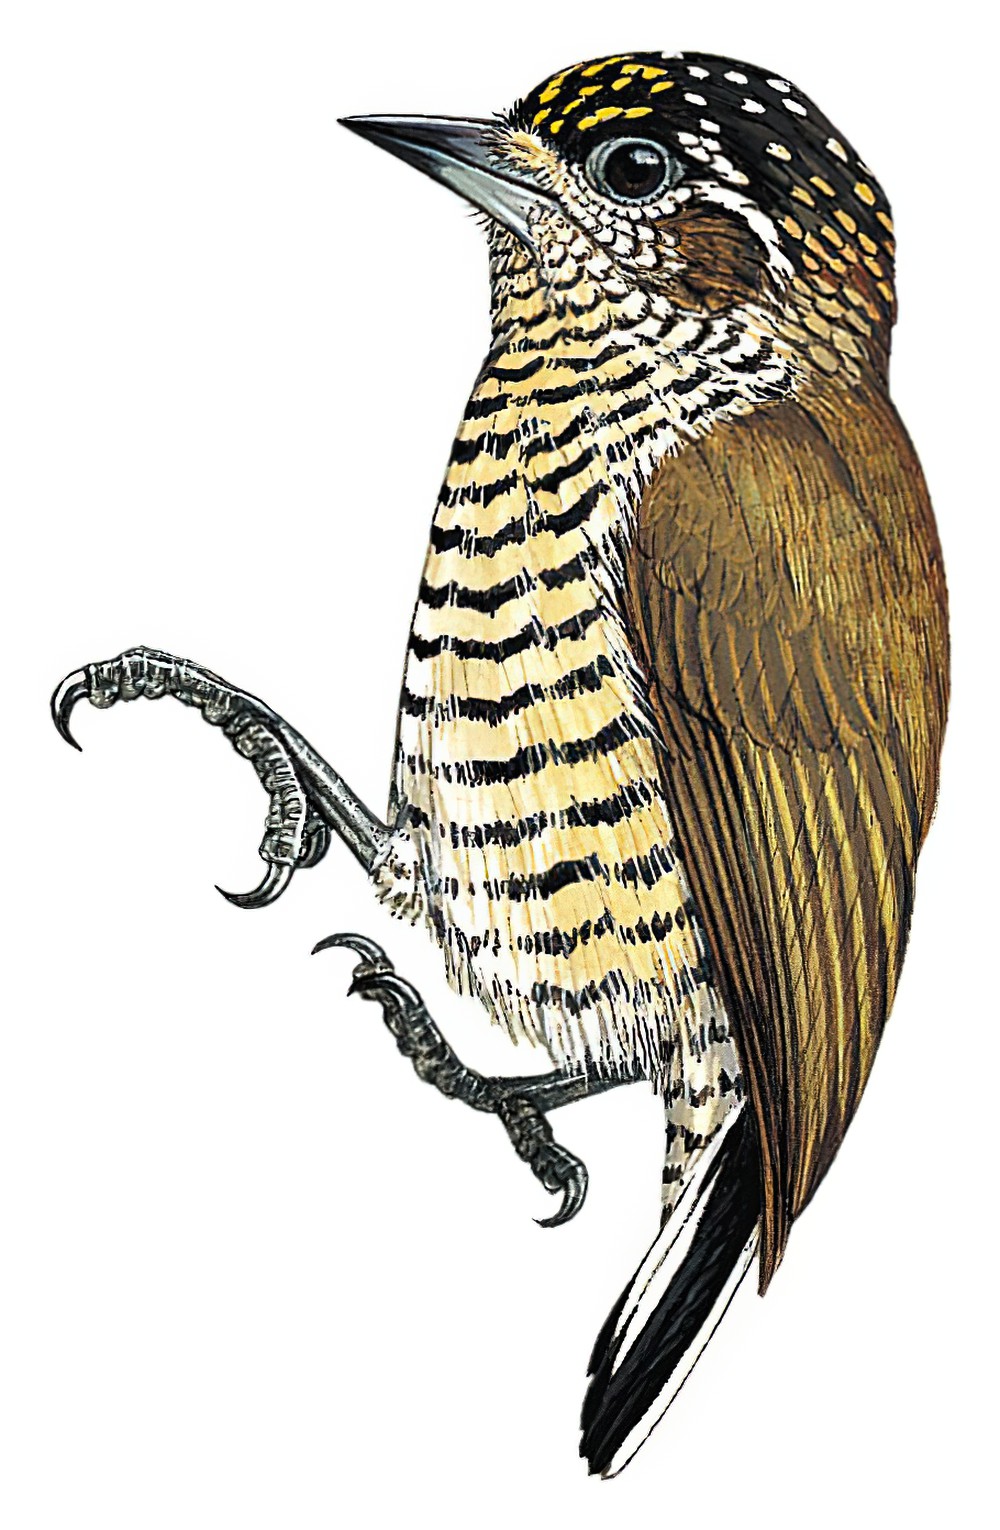 奥里姬啄木鸟 / Orinoco Piculet / Picumnus pumilus